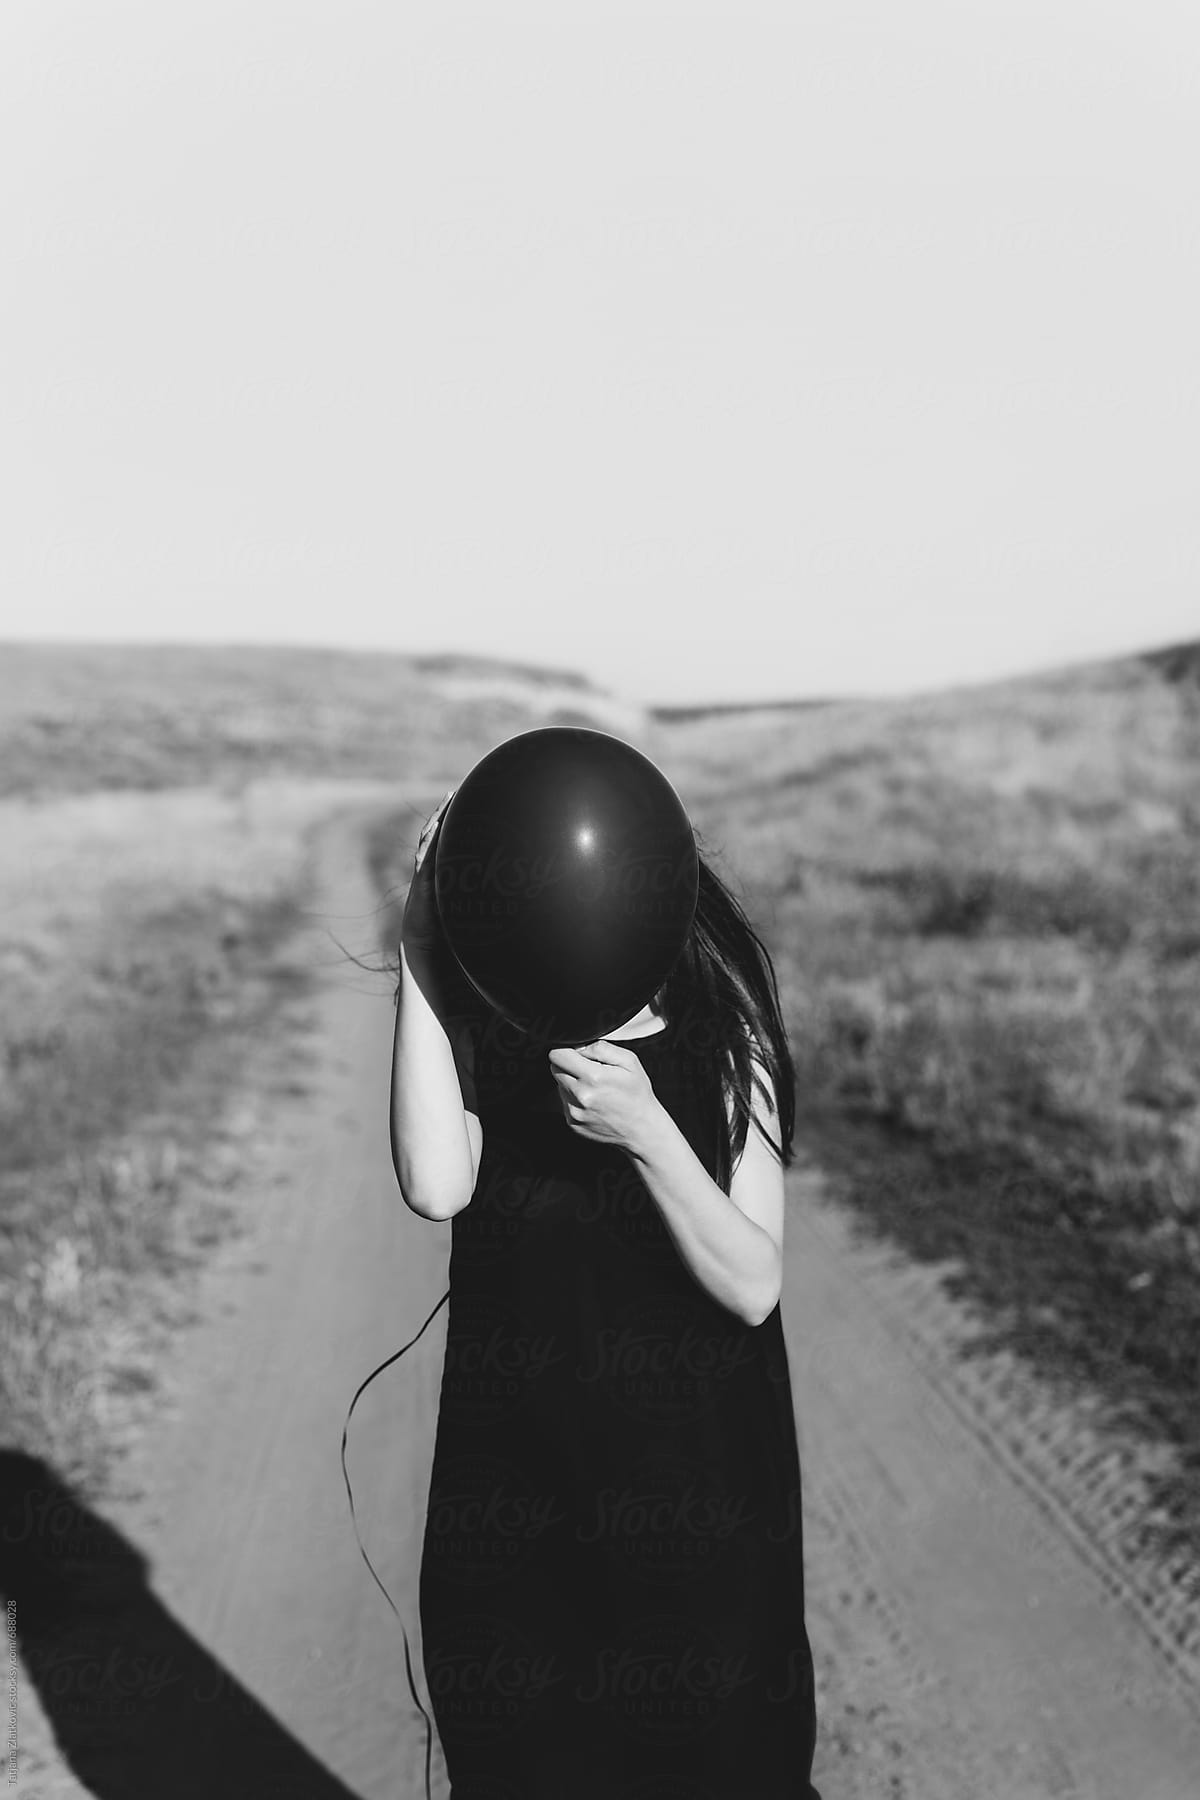 Woman in dark dress with black balloon